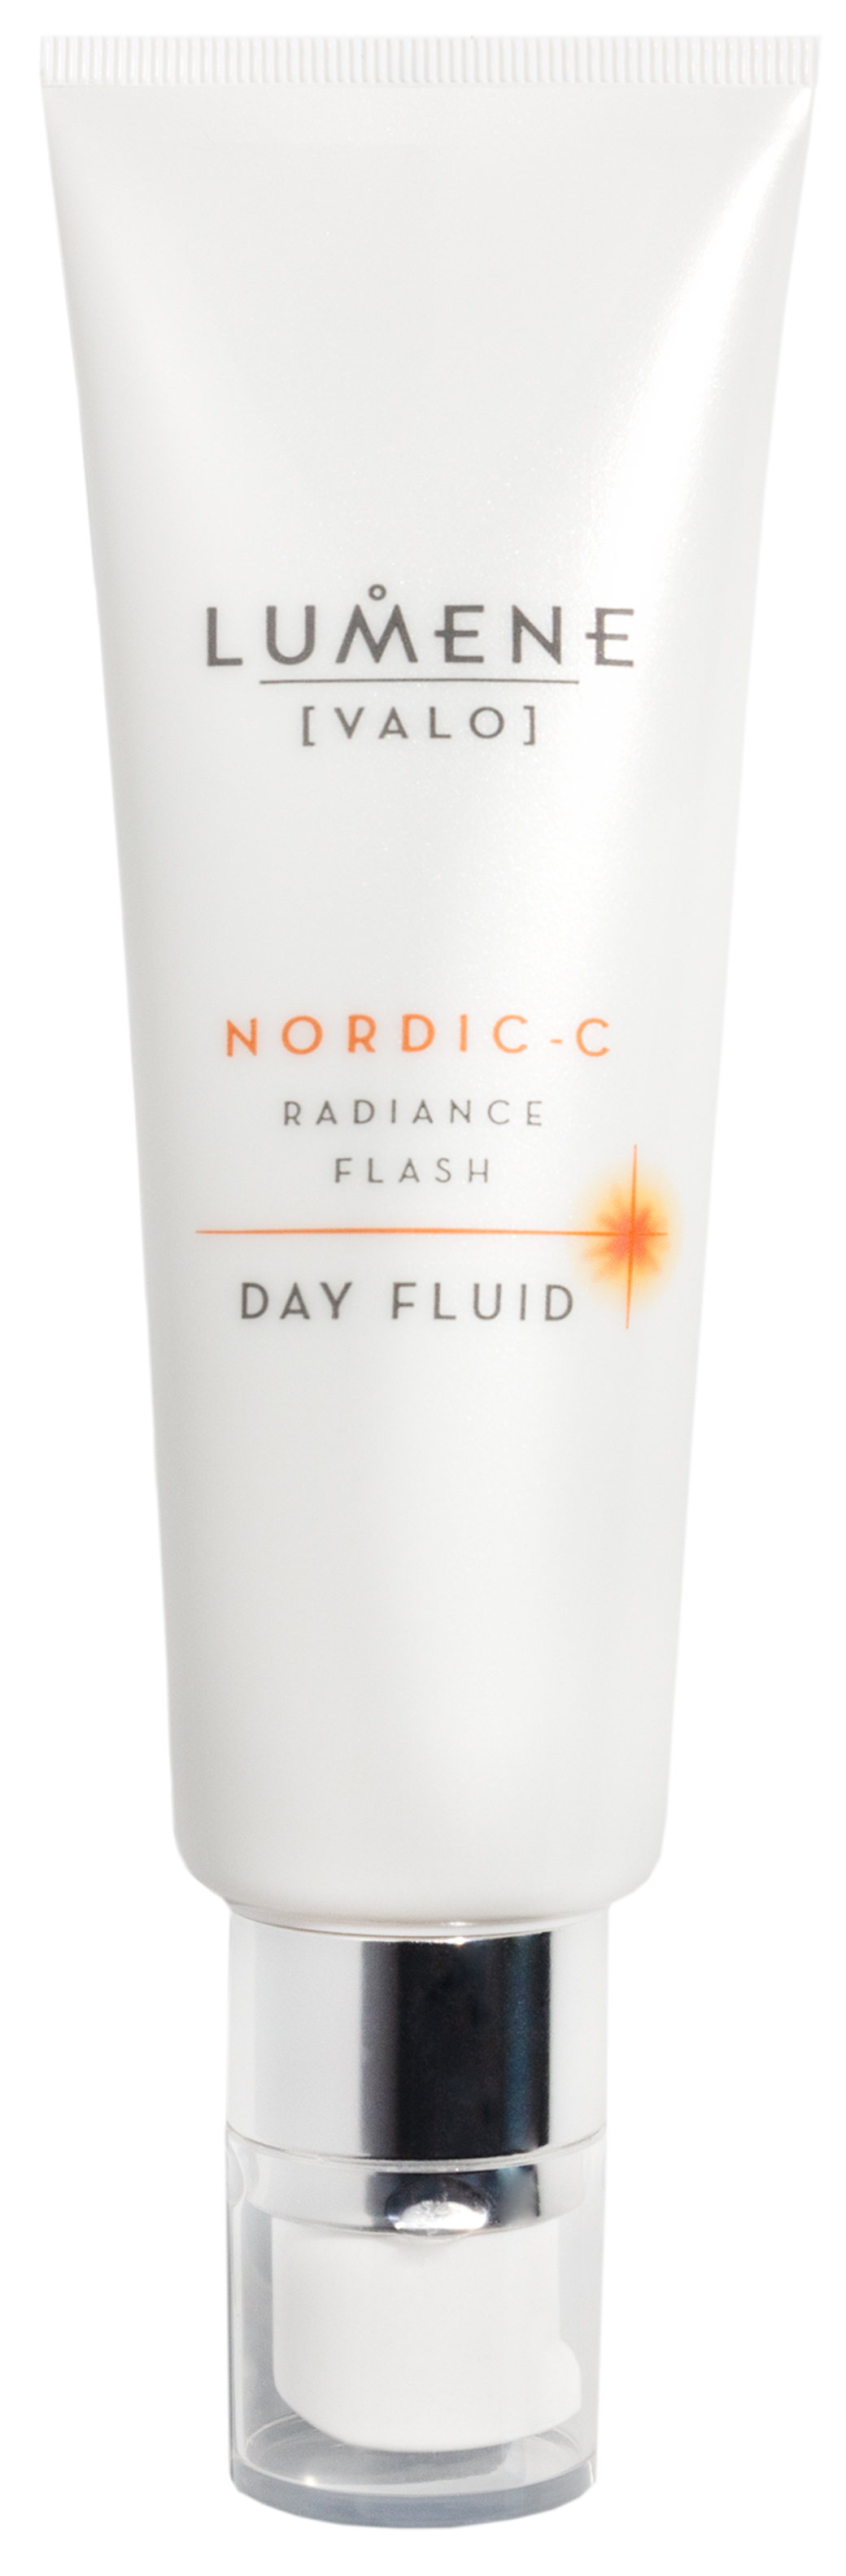 Lumene Valo Nordic-C Radiance Flash Day Fluid 50 ml